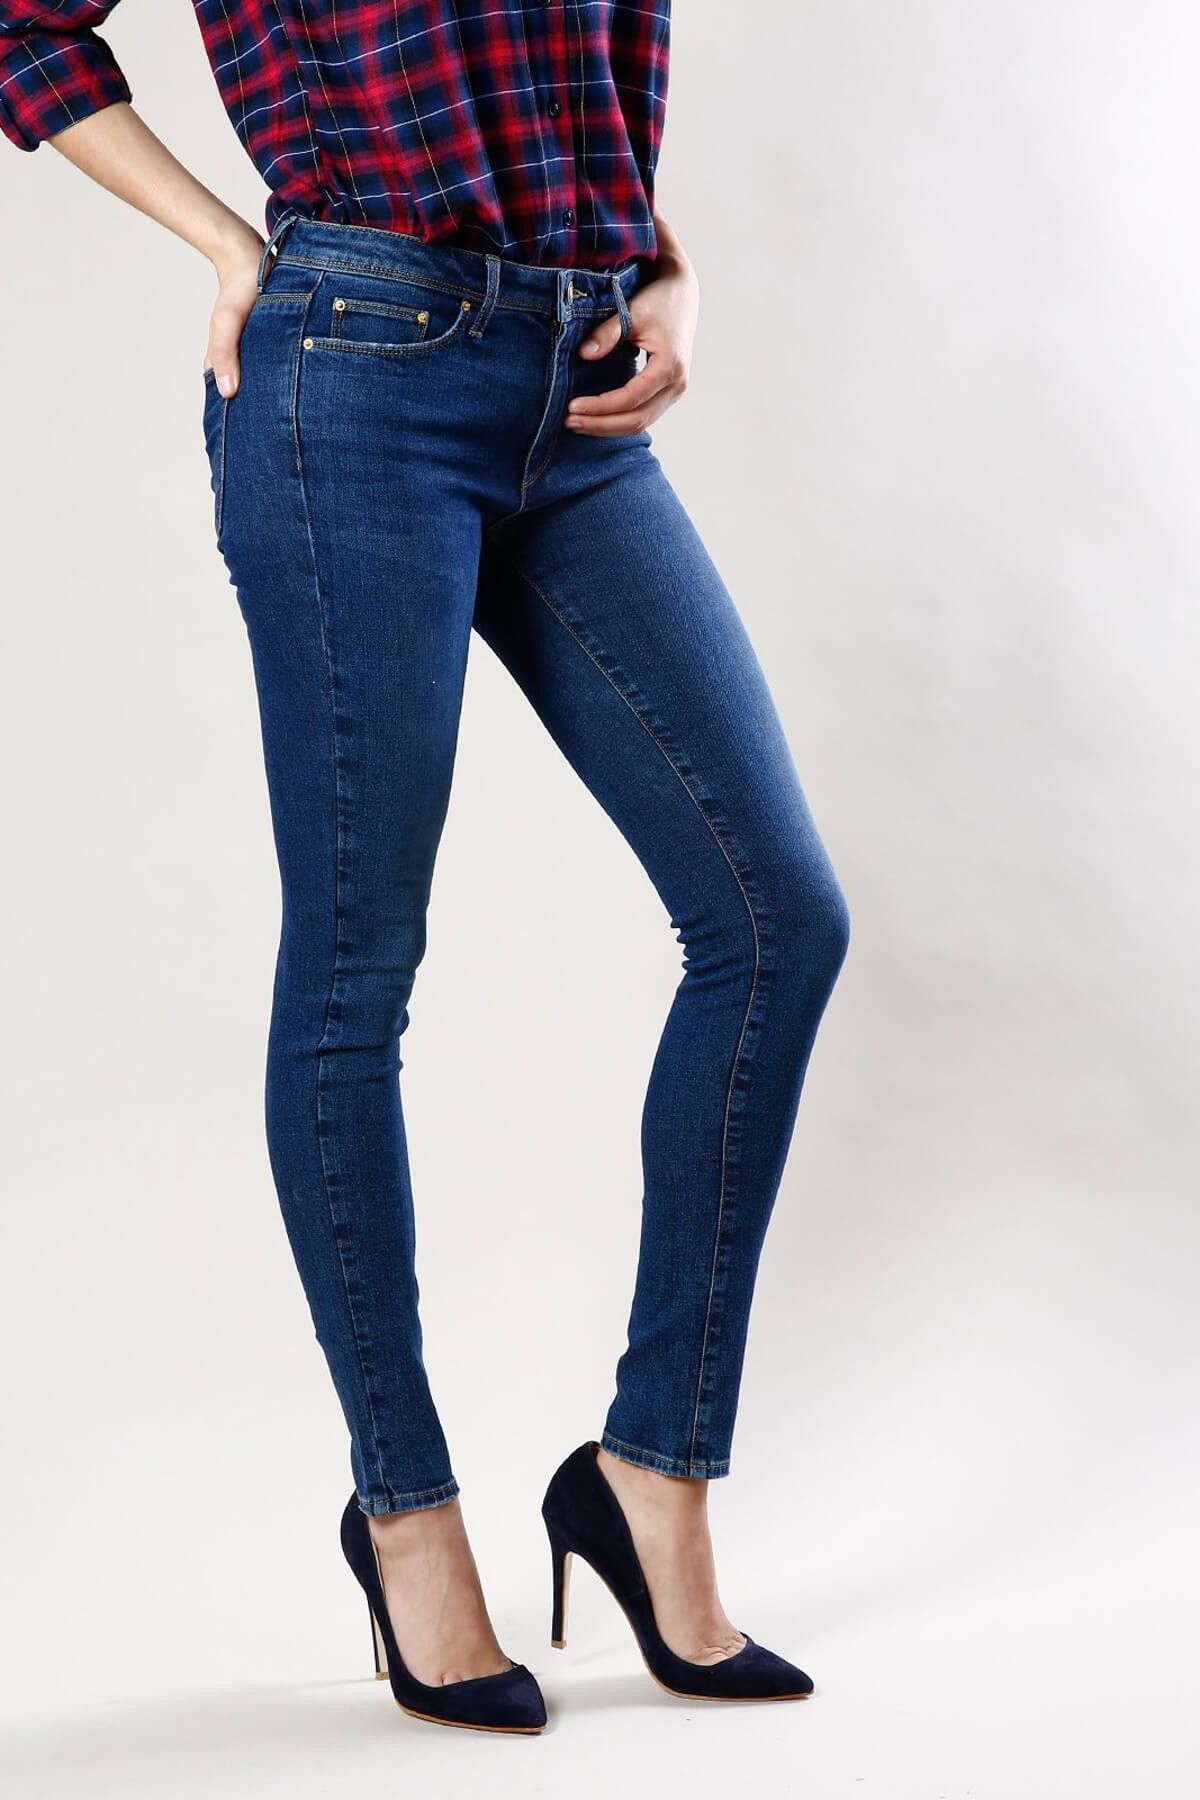 Colin’s 759 Lara Orta Bel Dar Paça Super Slim Fit Mavi Kadın Jean Pantolon